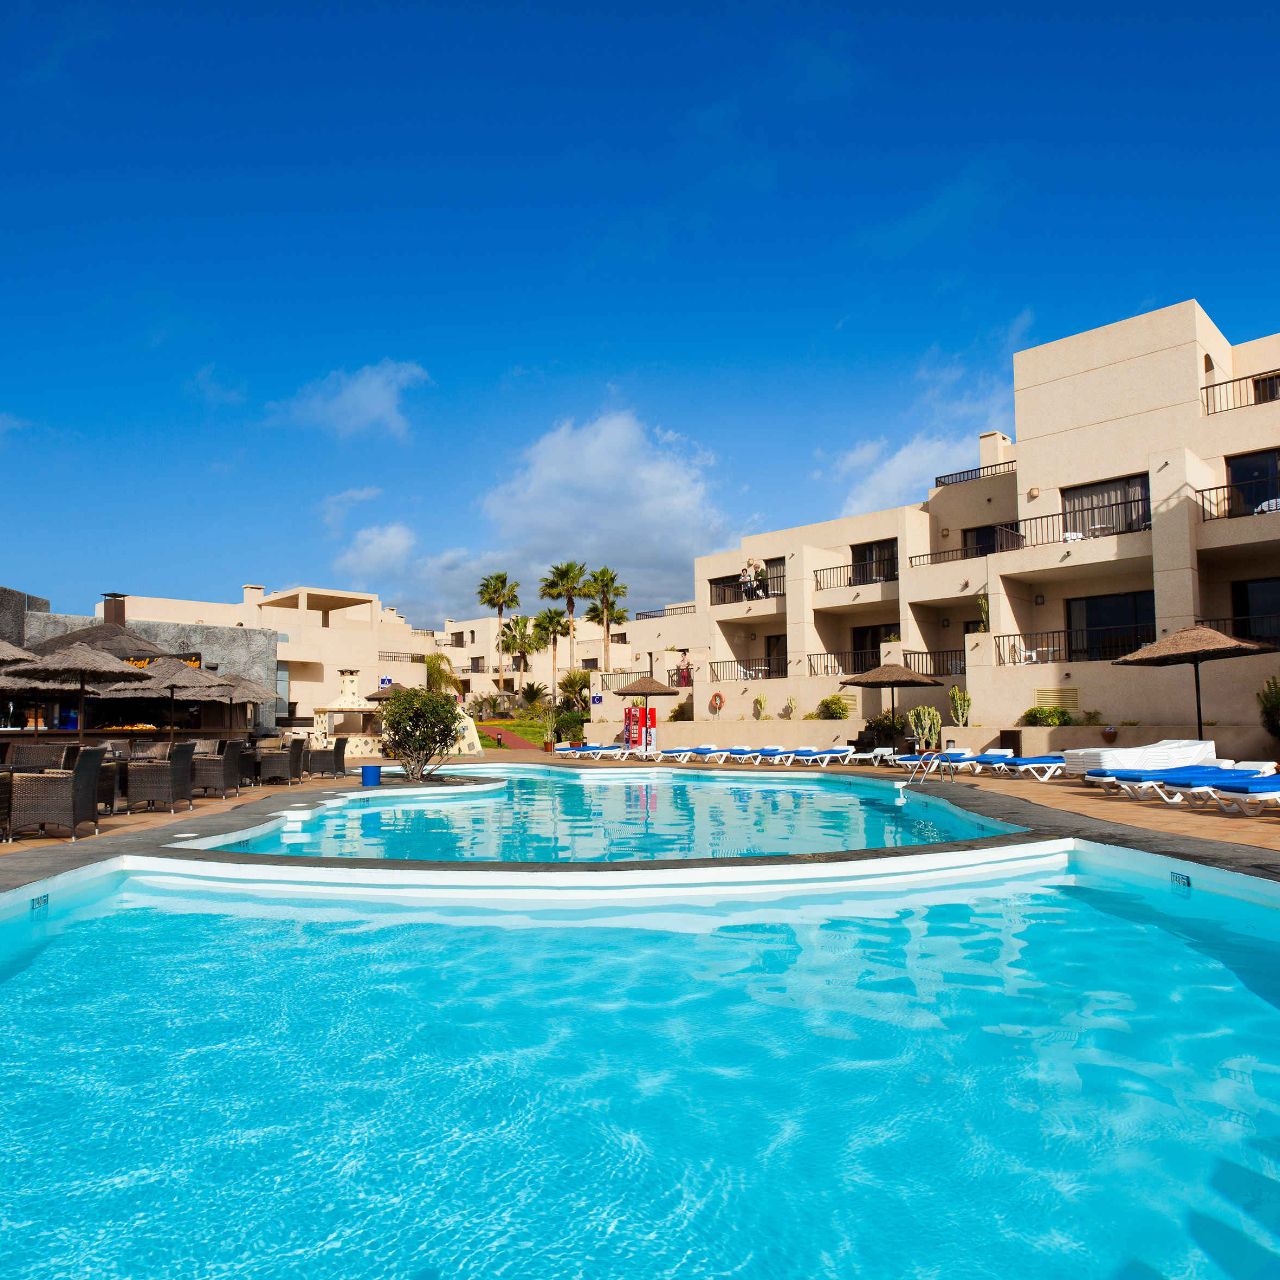 Hotel Blue Sea Costa Teguise Gardens en Islas Canarias - HOTEL INFO